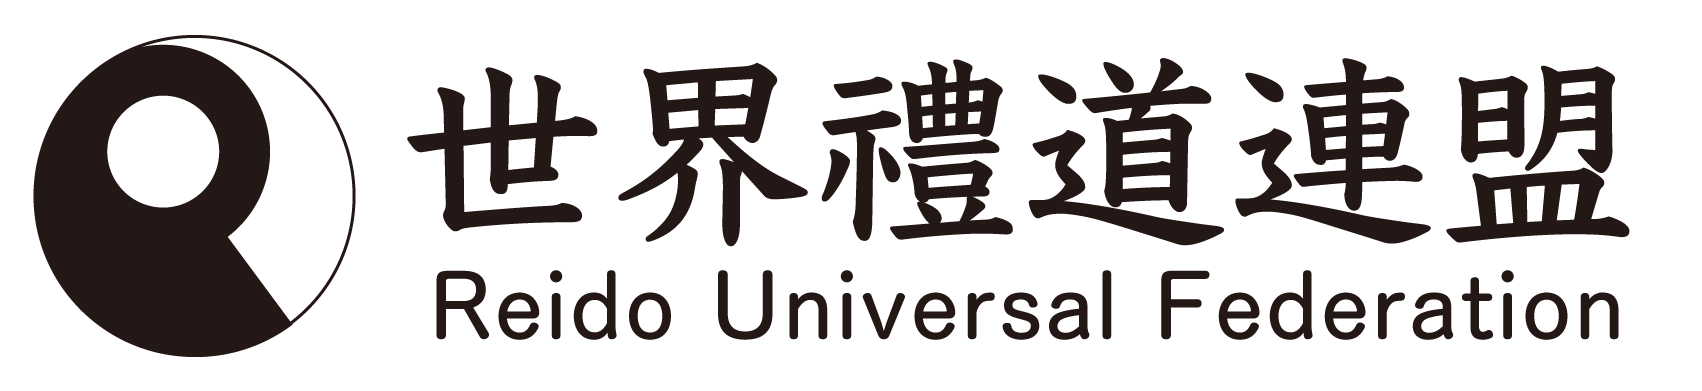 Reido Universal Federation